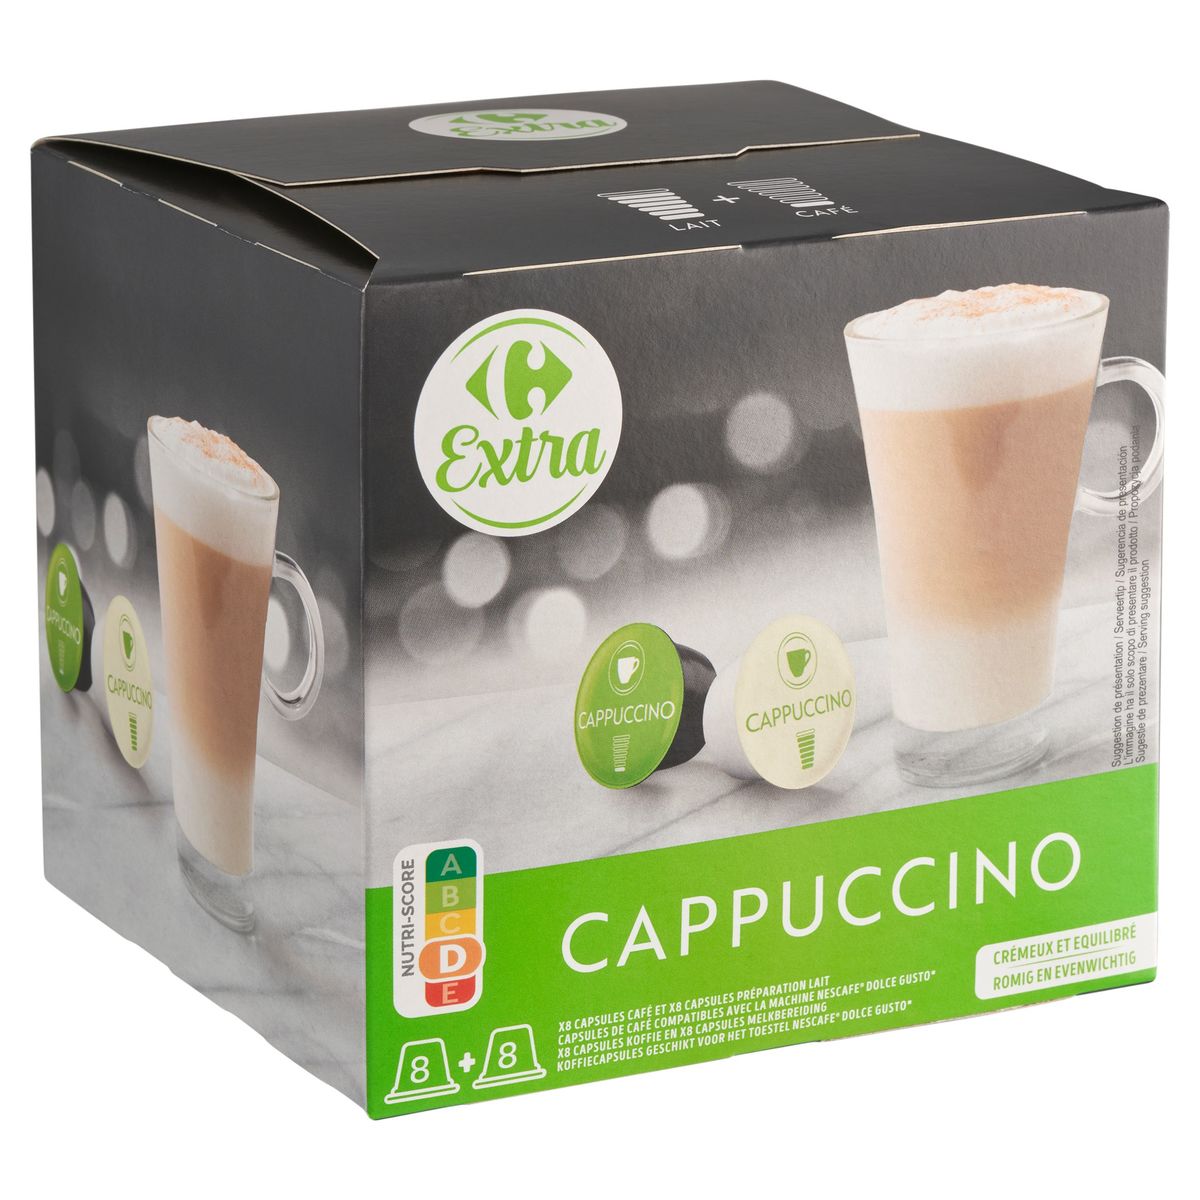 Carrefour Extra Cappuccino 16 Capsules 164 g